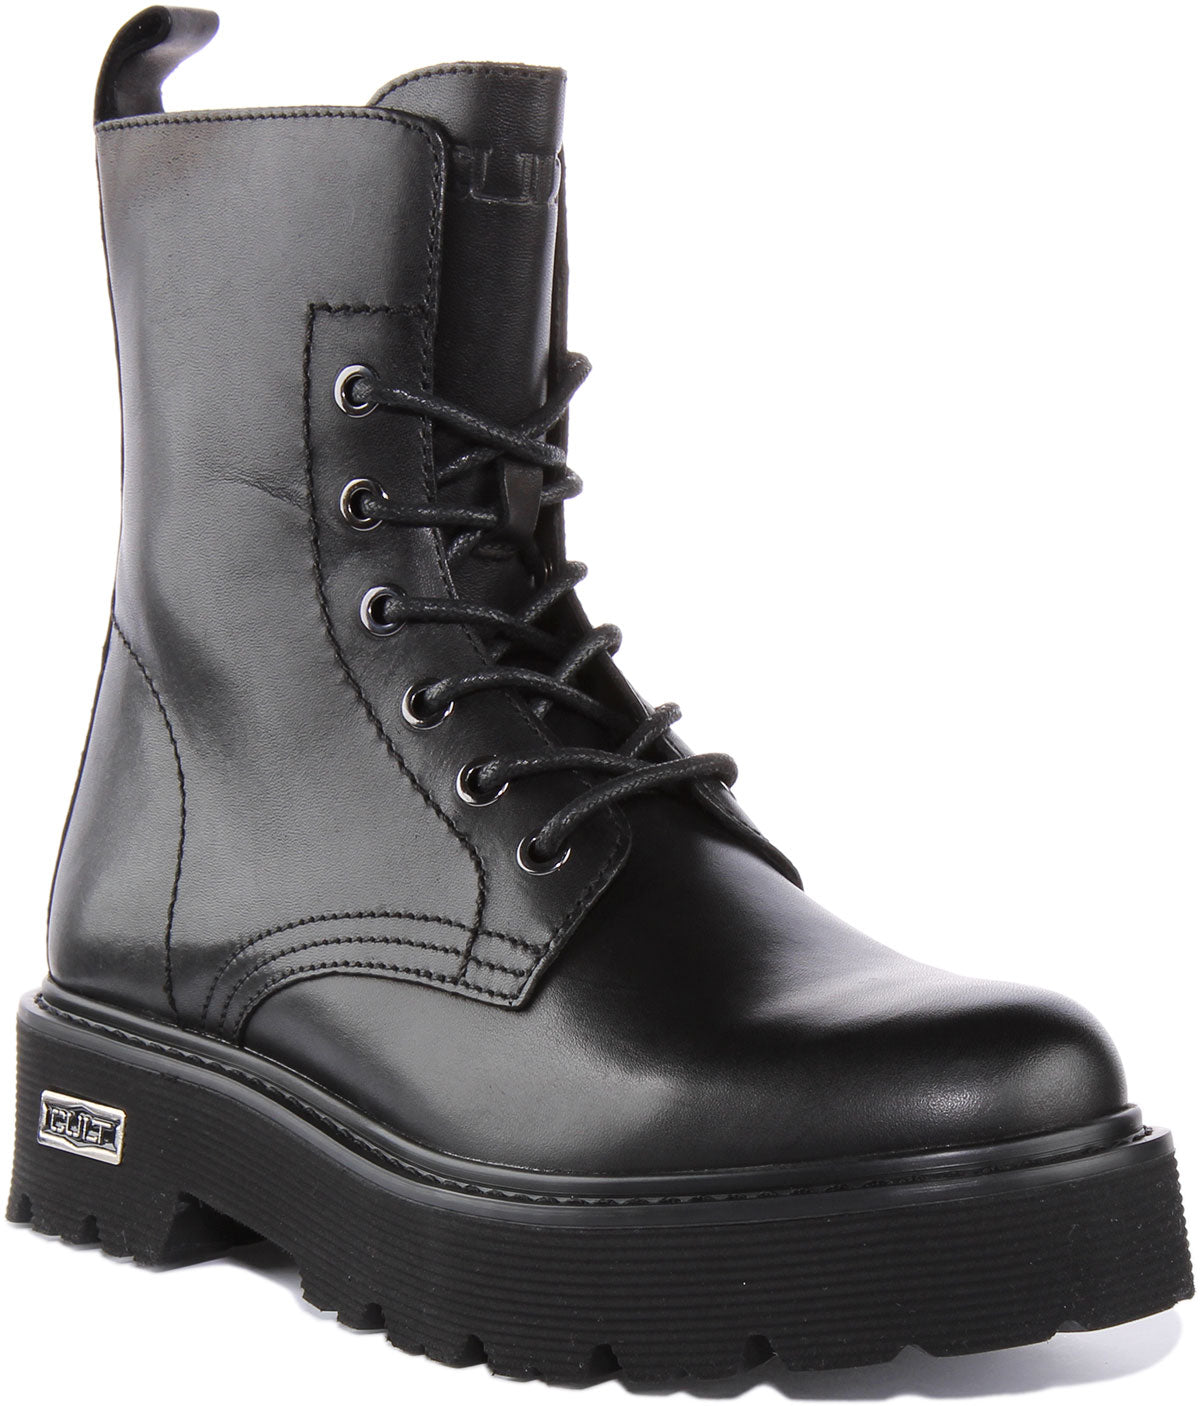 Slash 3037 men's black boots